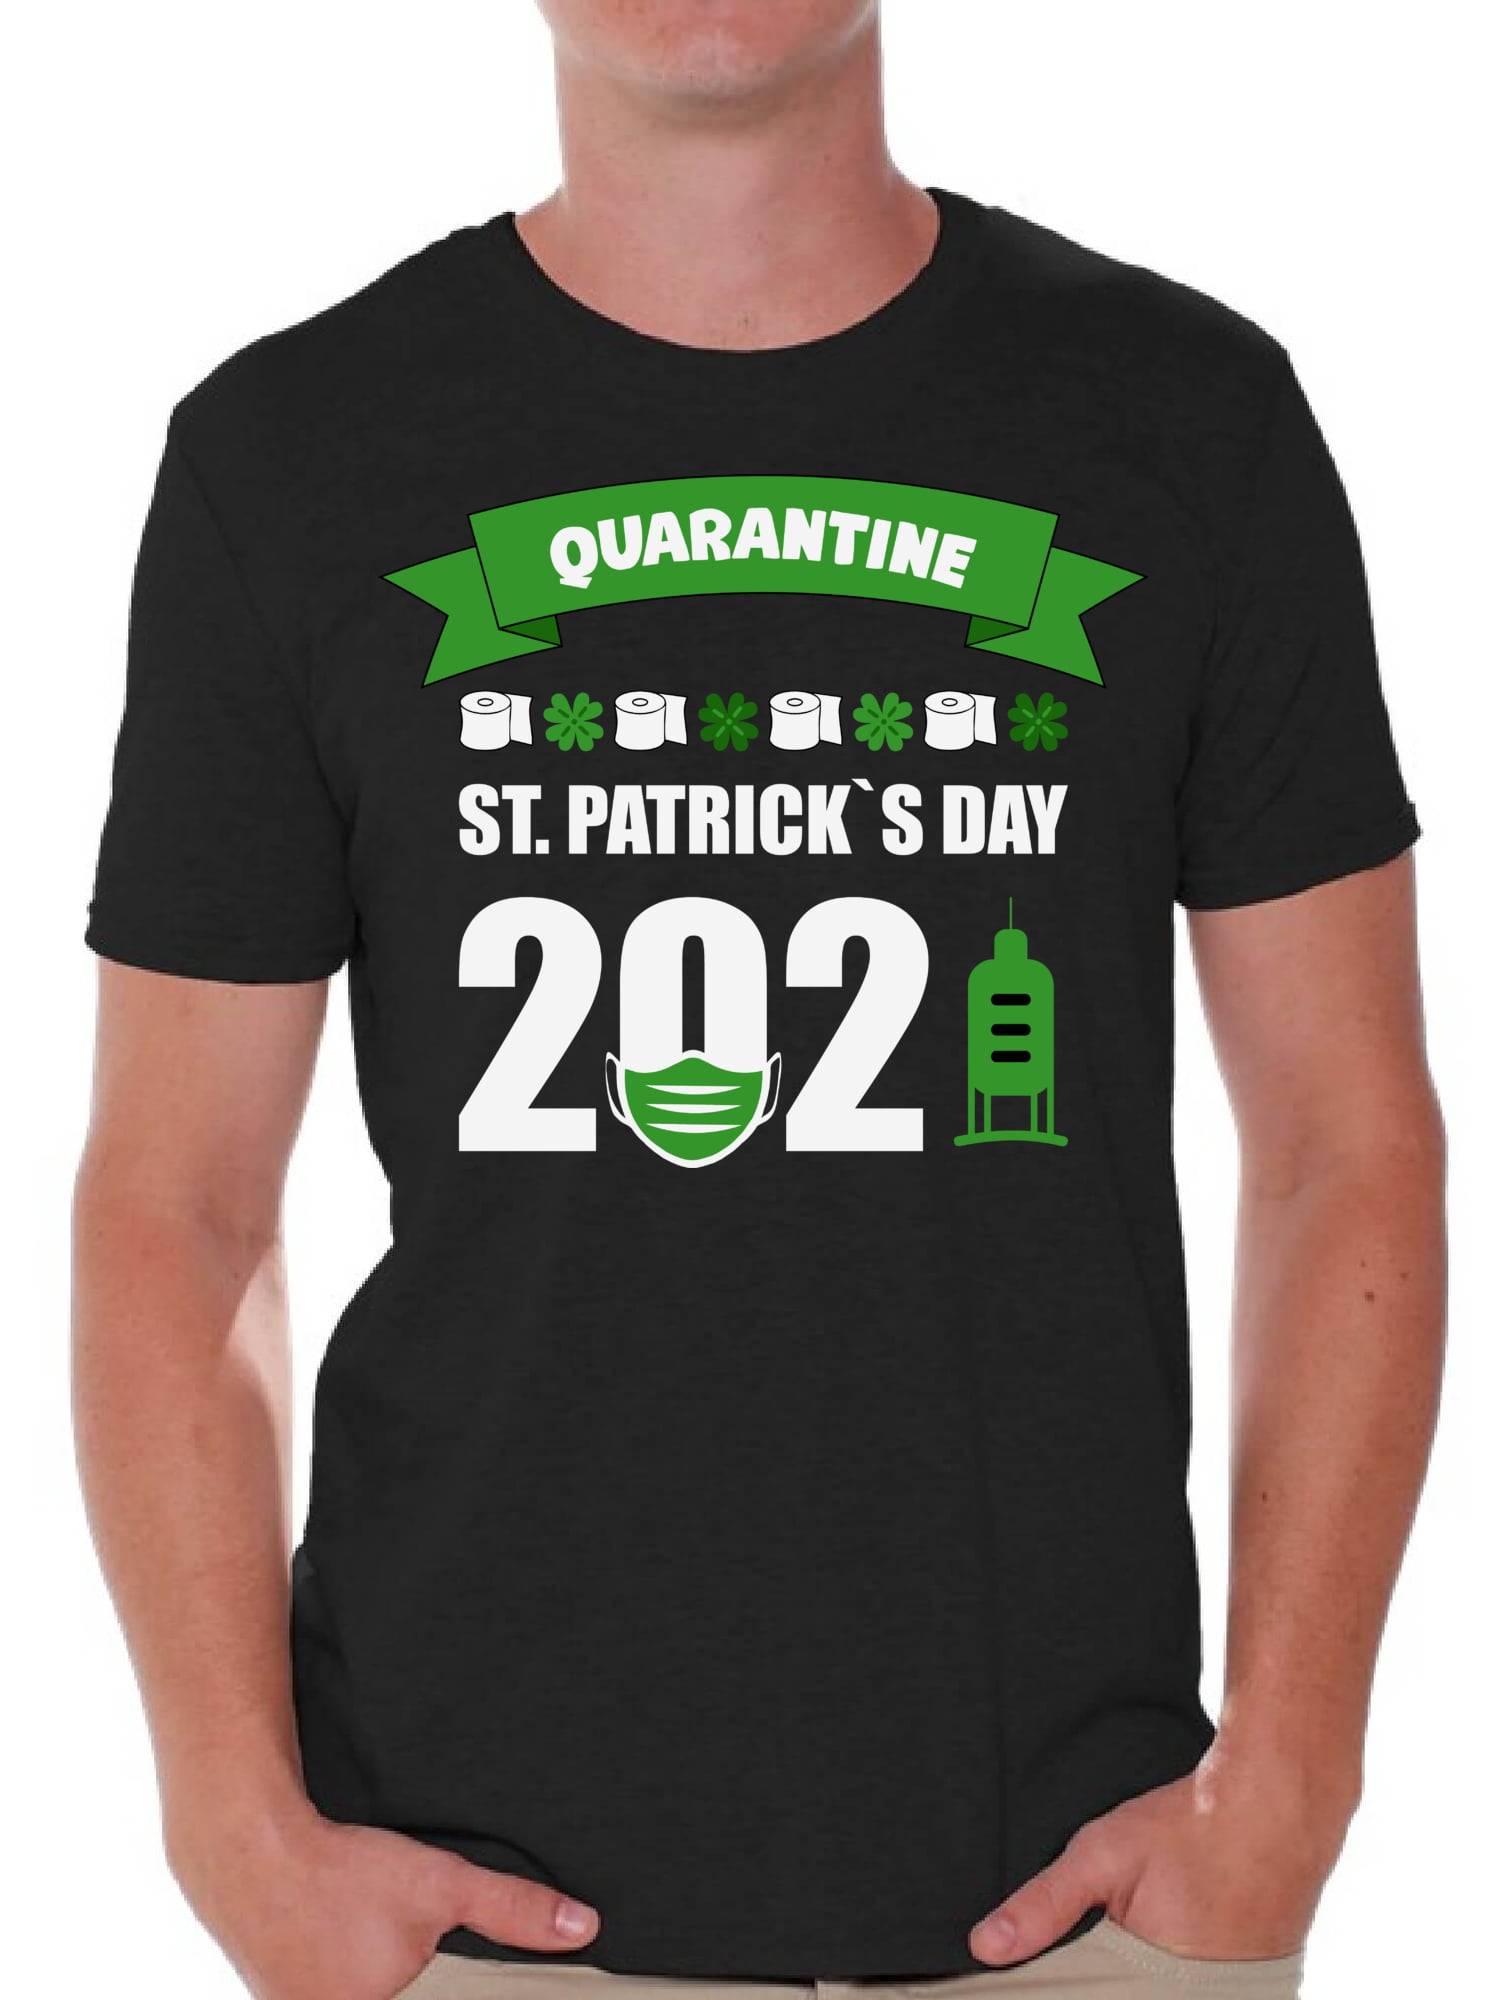 St Patrick Party Shirt Funny St Patricks Day Shirt Quarantine Drink Shirt Quarantine St Patricks Day 2021 Shirt Quarantine Shirt